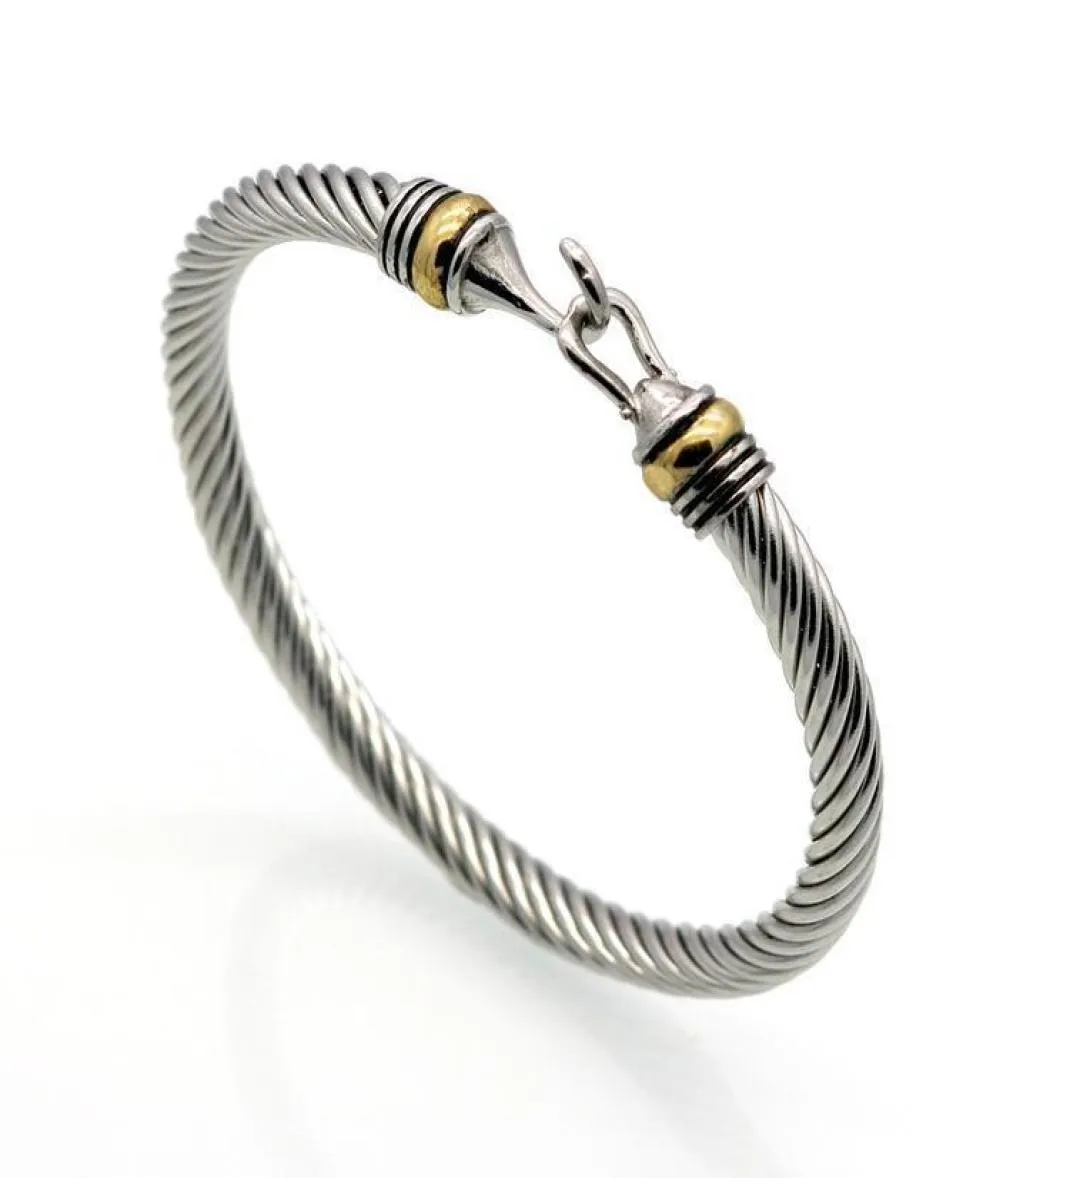 Popular steel wire ed hook shaped Bracelet Gold Bracelet Stainless steel cable Bracelet6367703